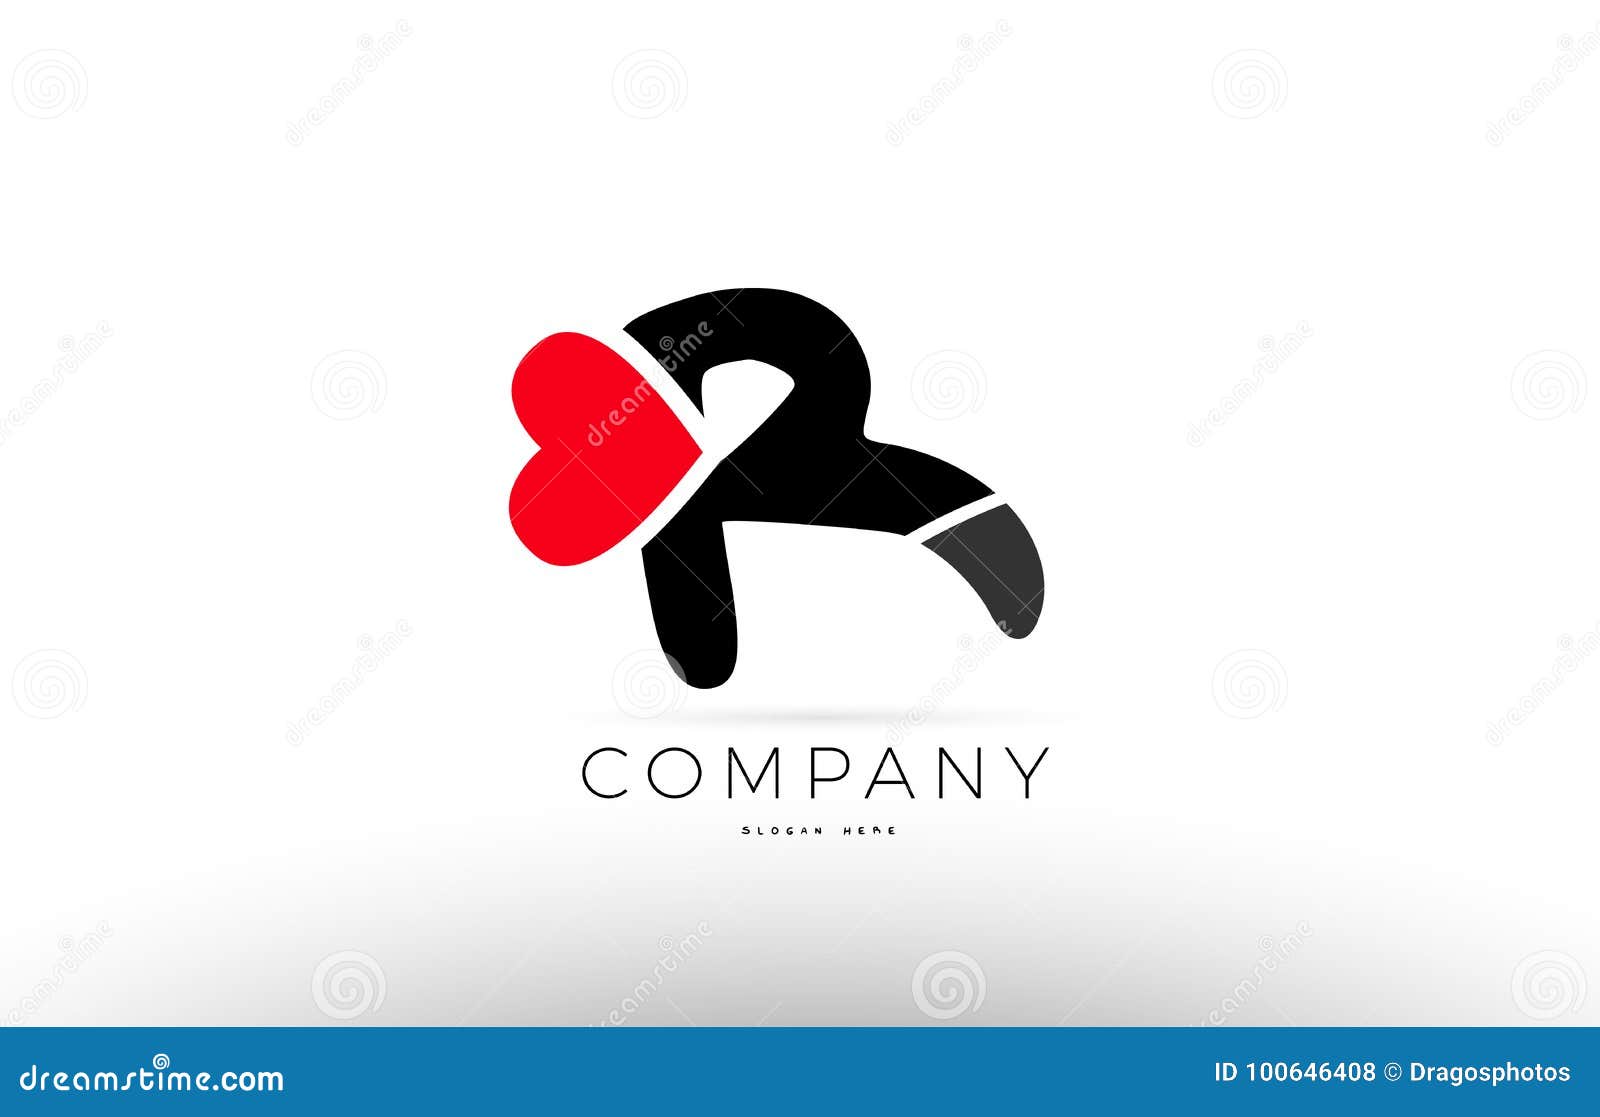 R Alphabet Letter Logo Icon with Love Heart Symbol Company Design ...